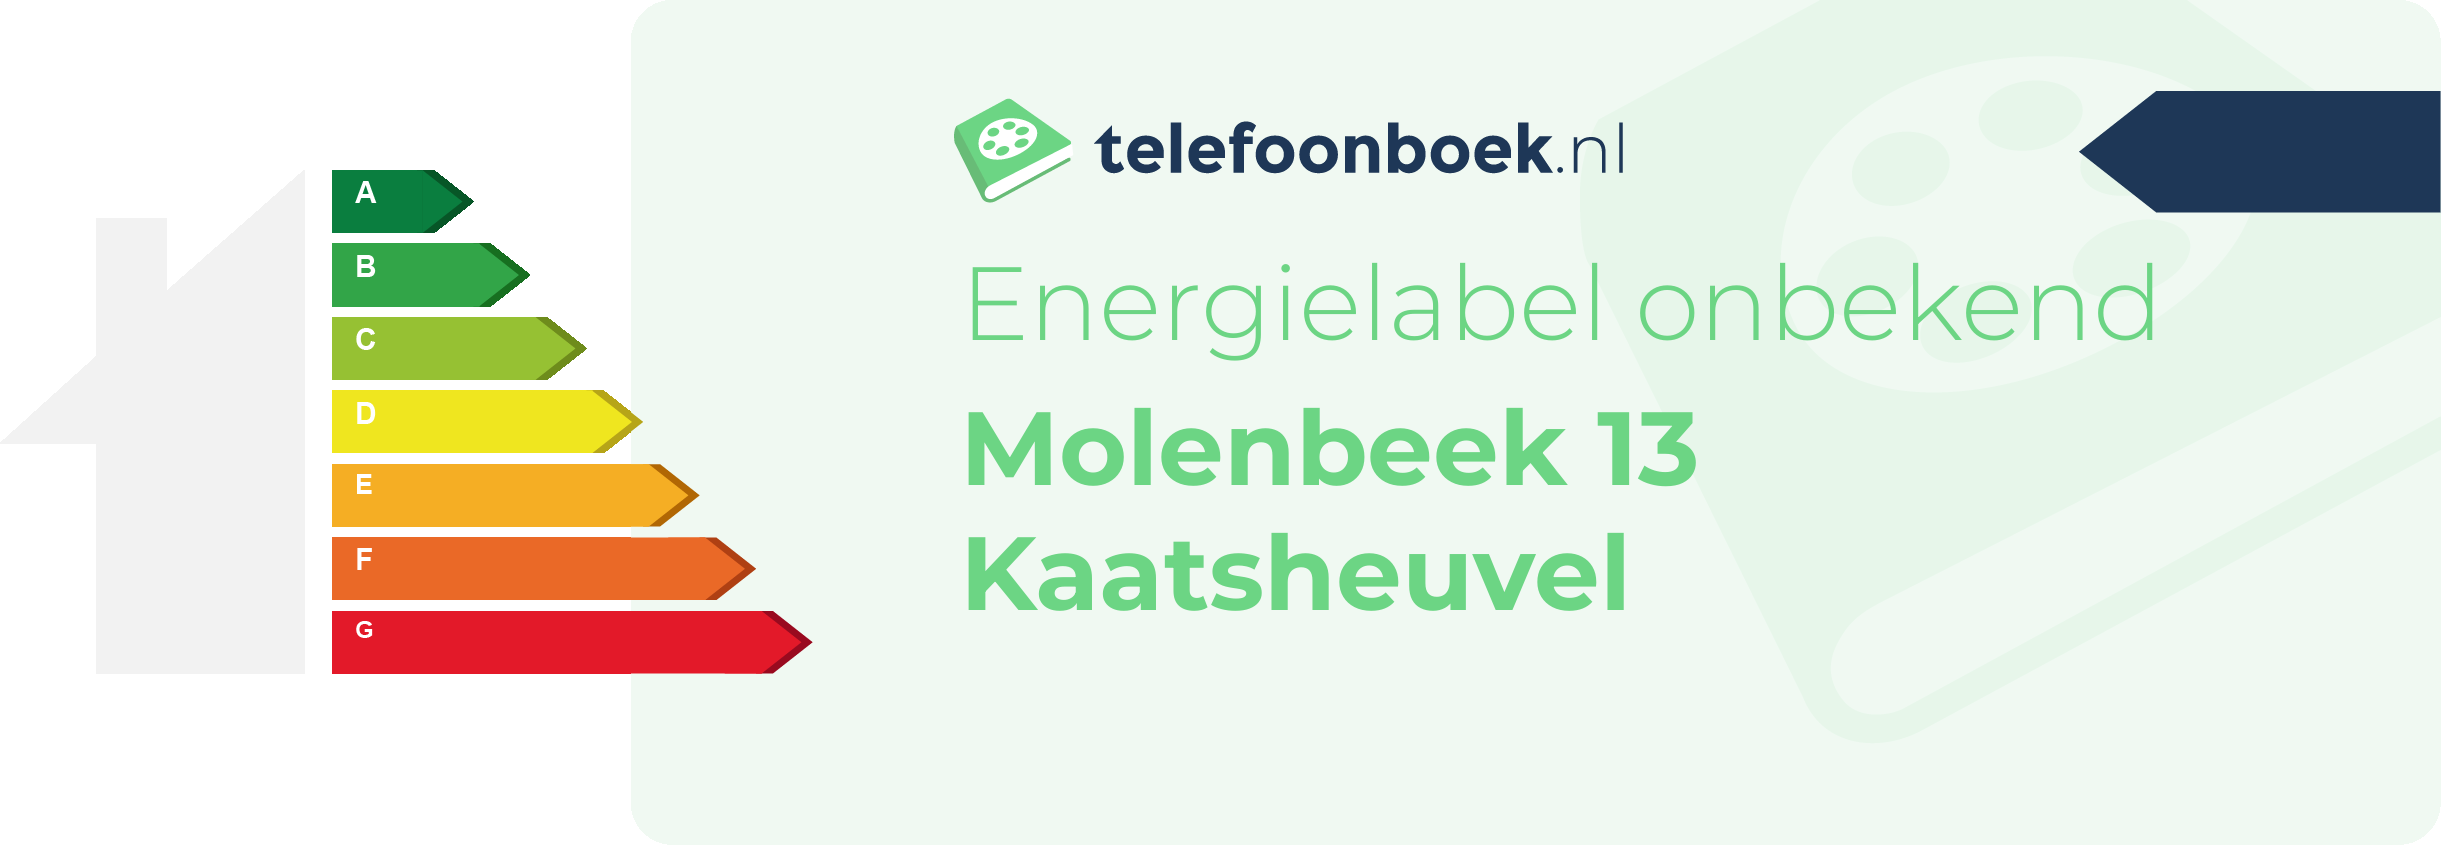 Energielabel Molenbeek 13 Kaatsheuvel